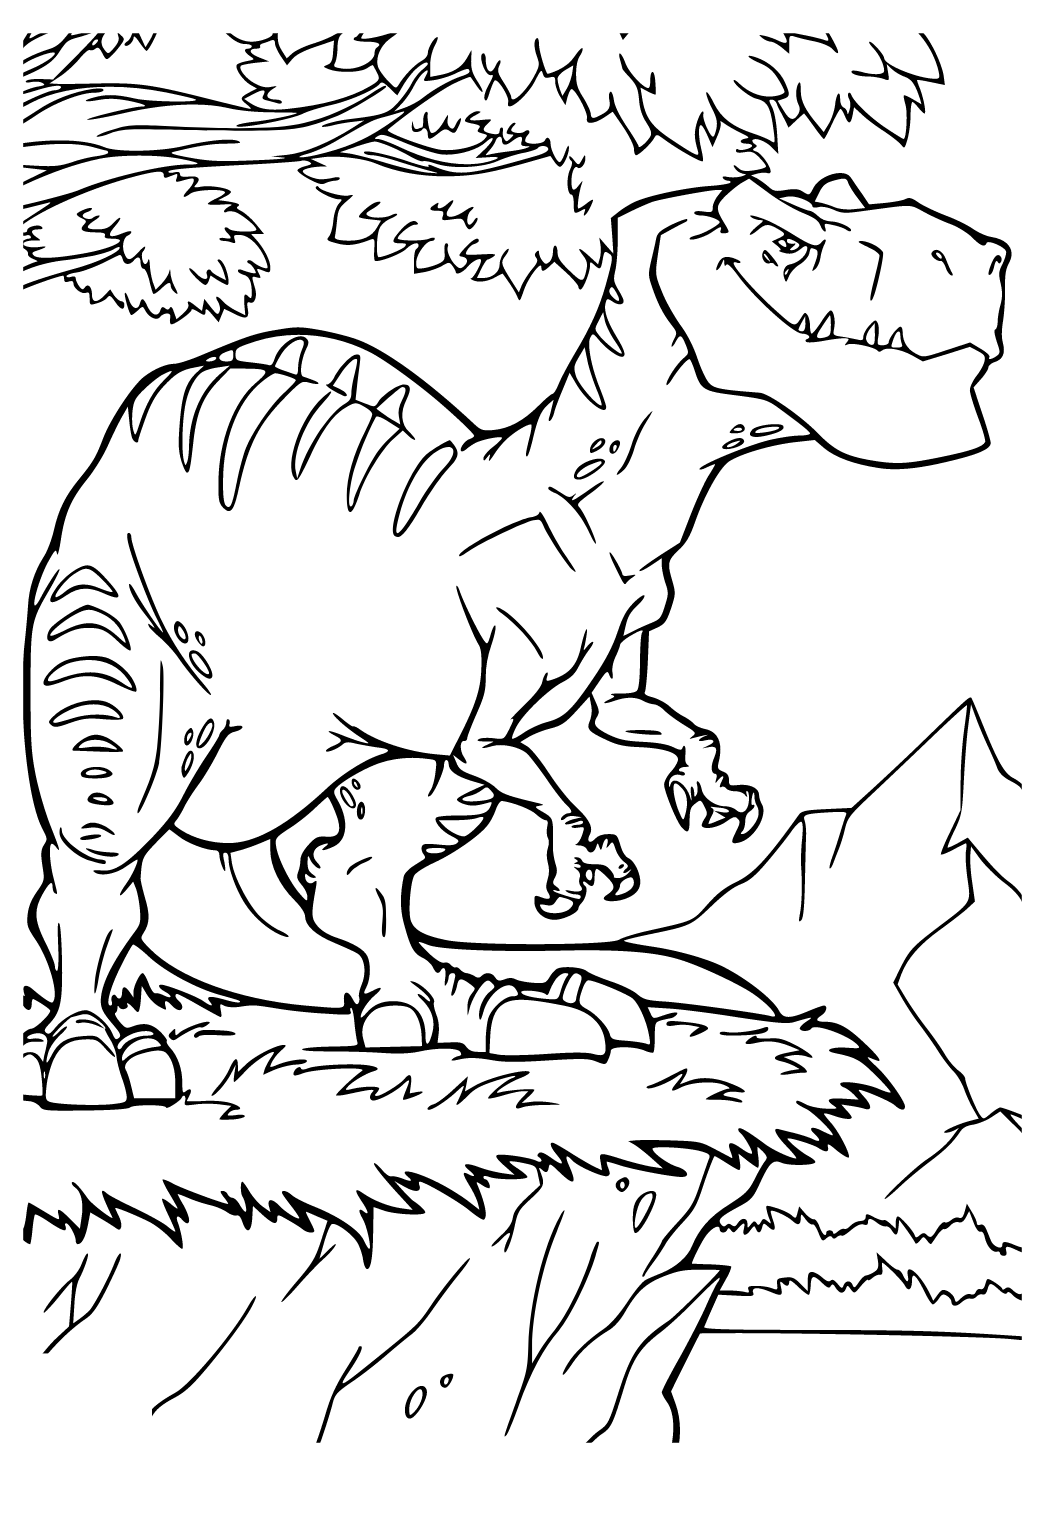 Alosaurio